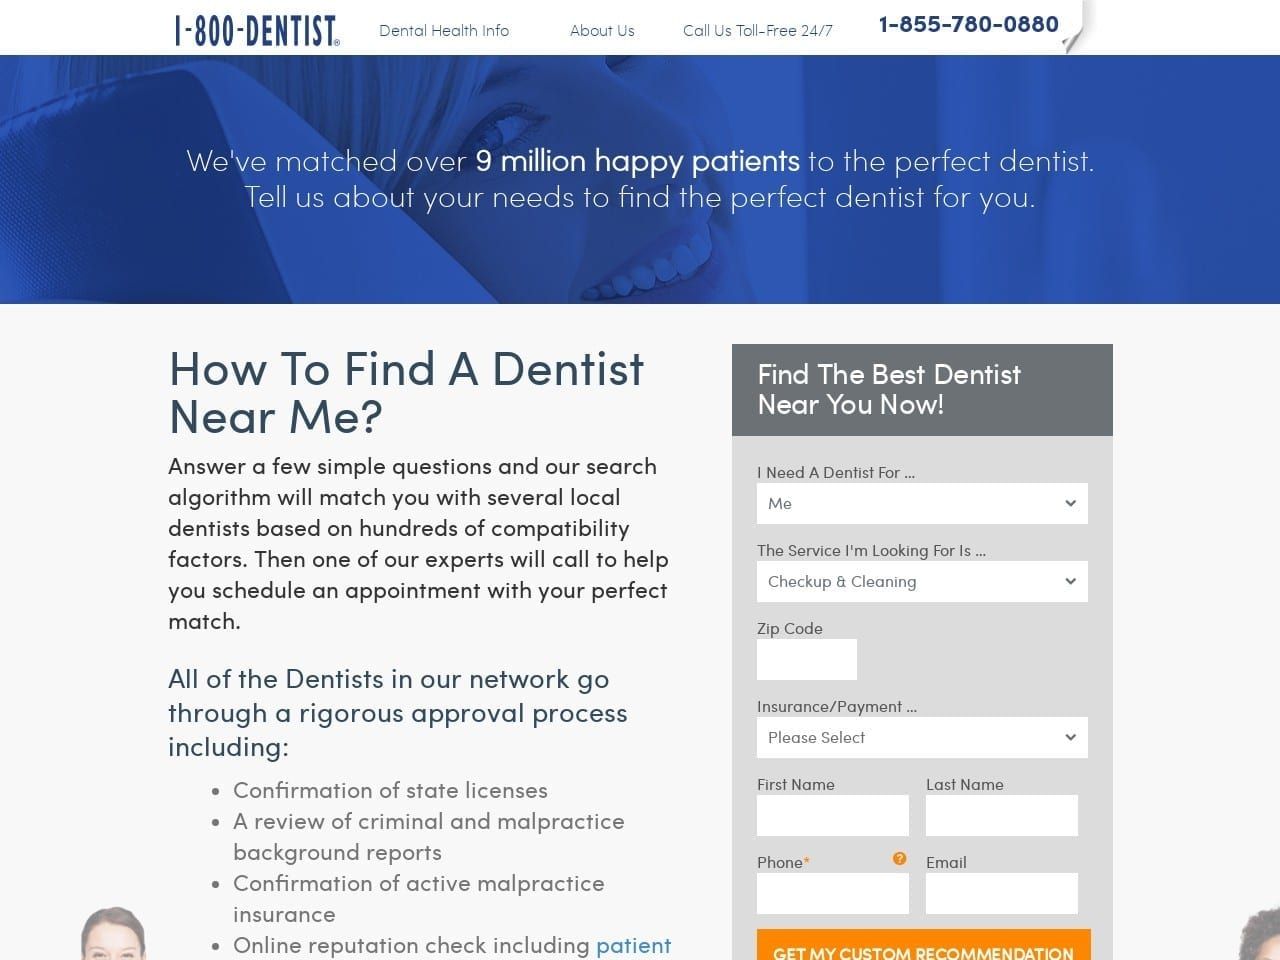 Southwest Dental Center Jhanji Ashok DDS Website Screenshot from 1800dentist.com